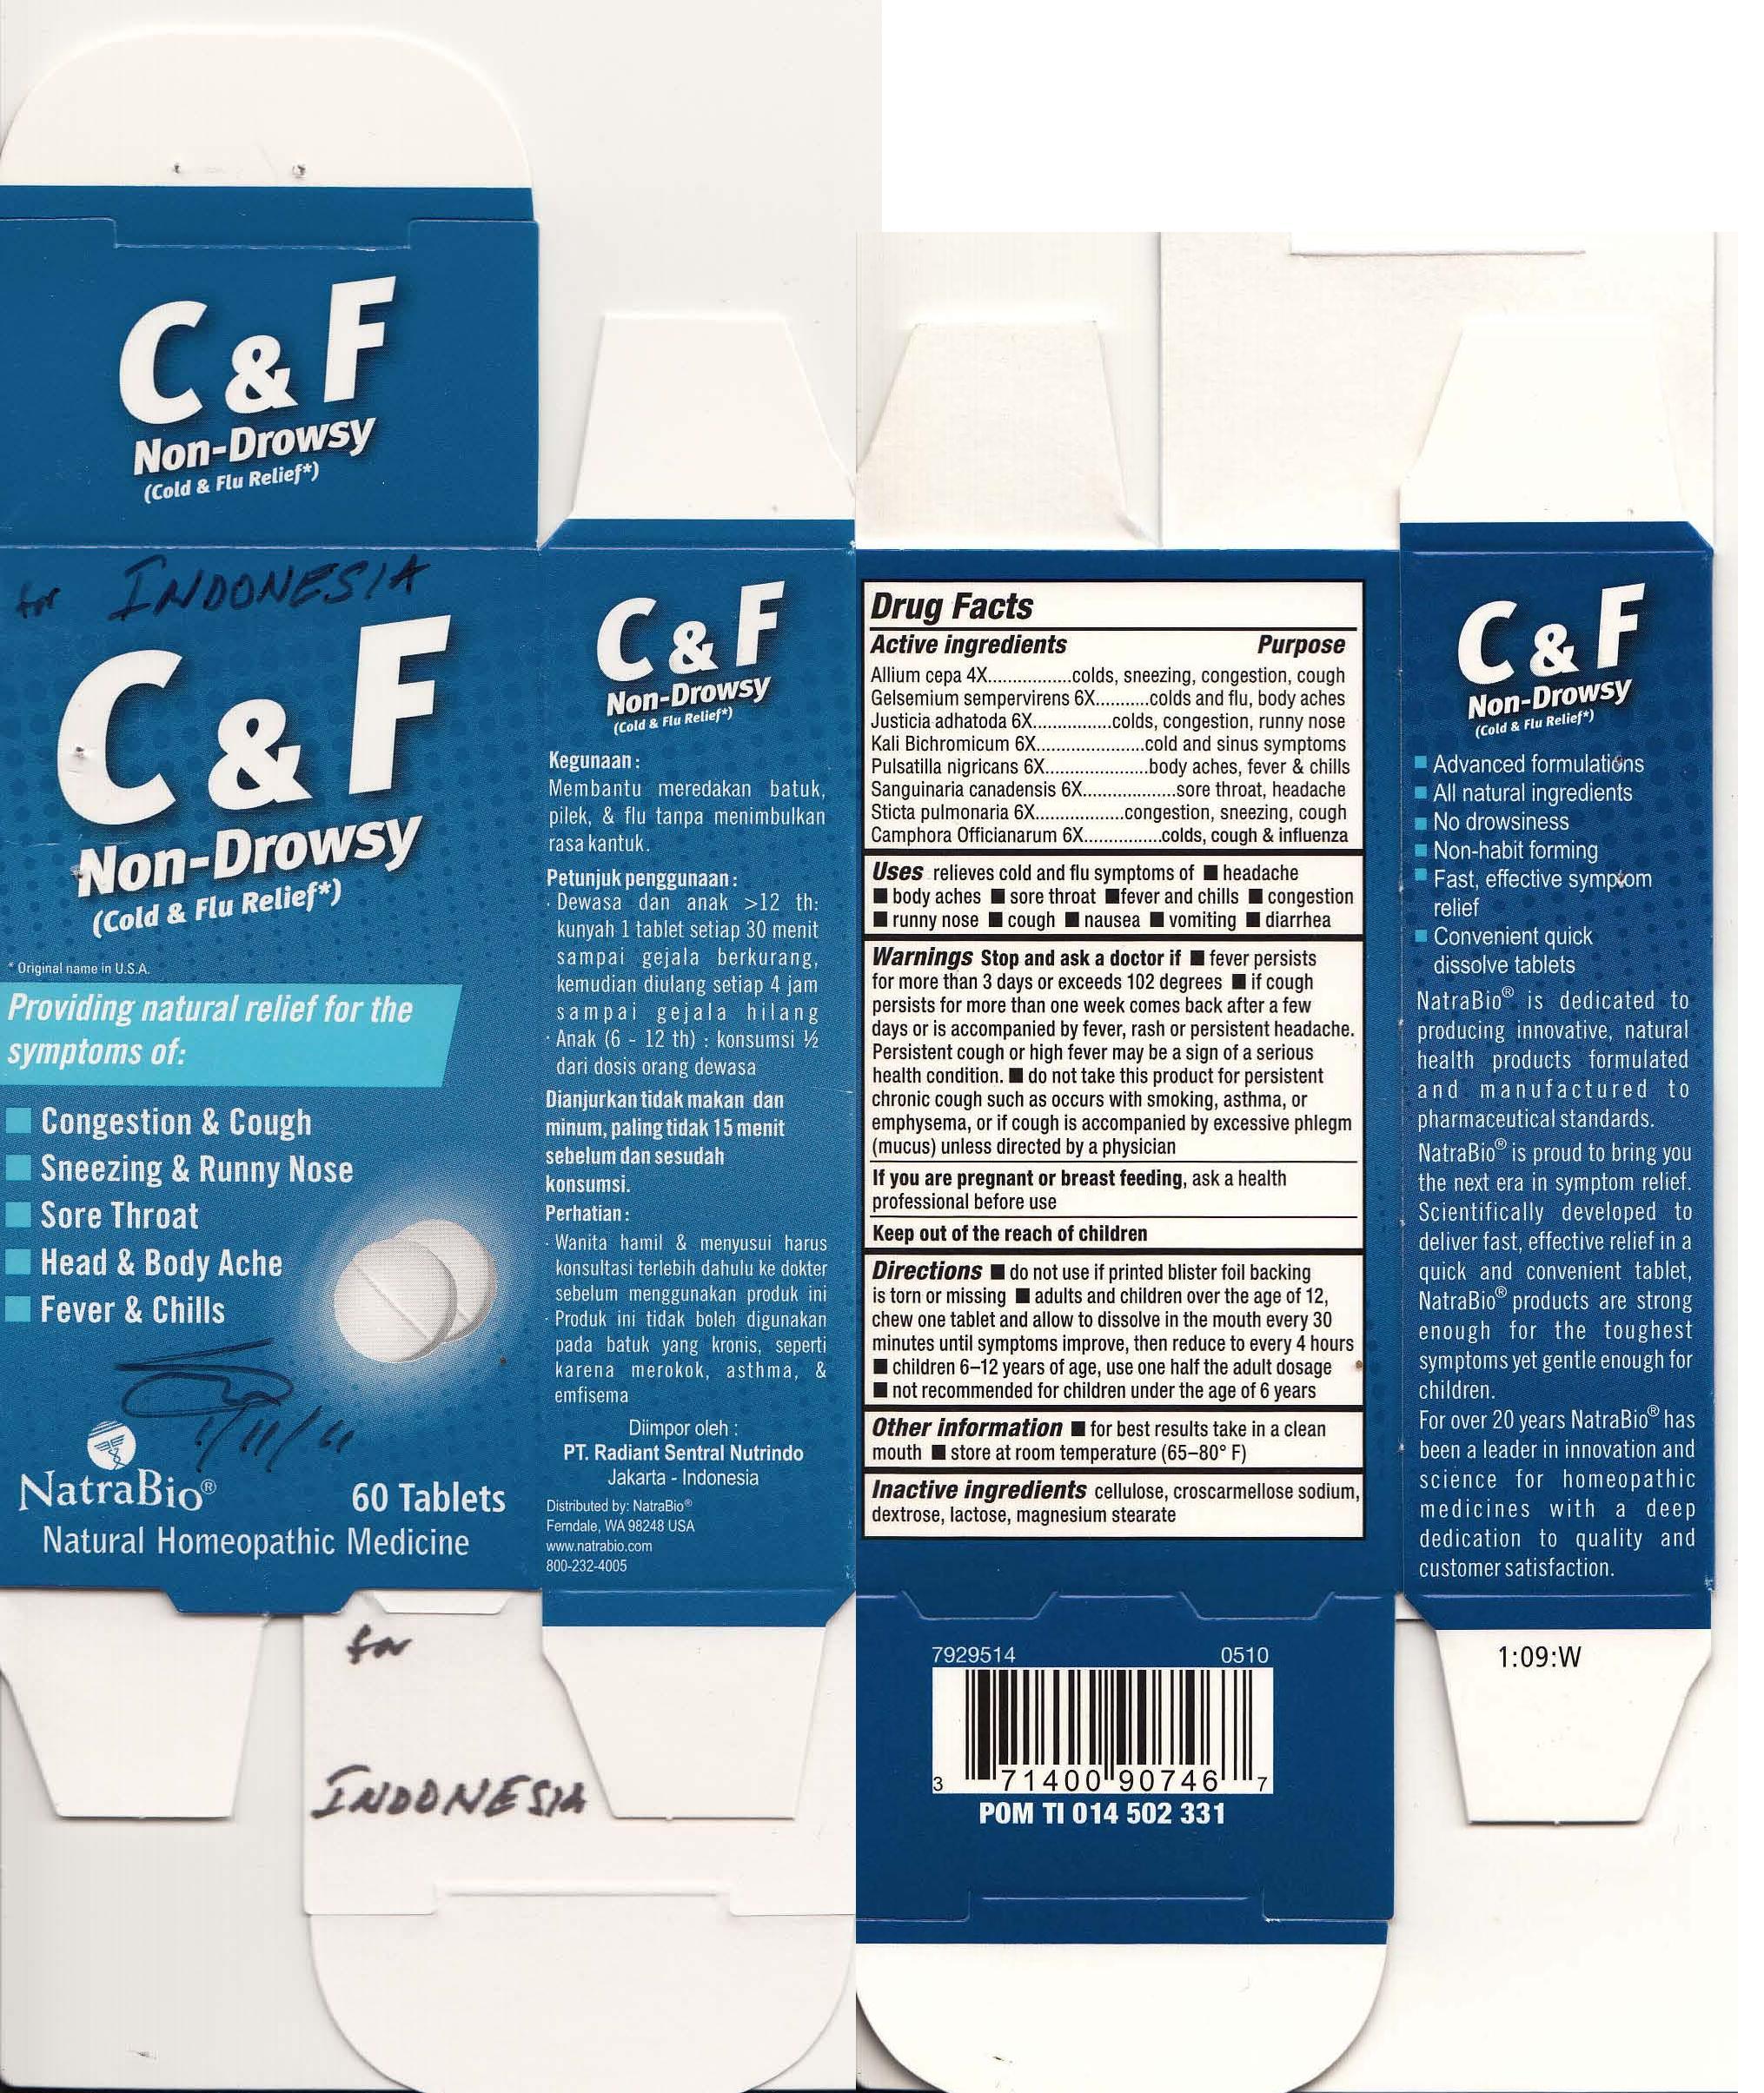 Cold & Flu Indonesia carton